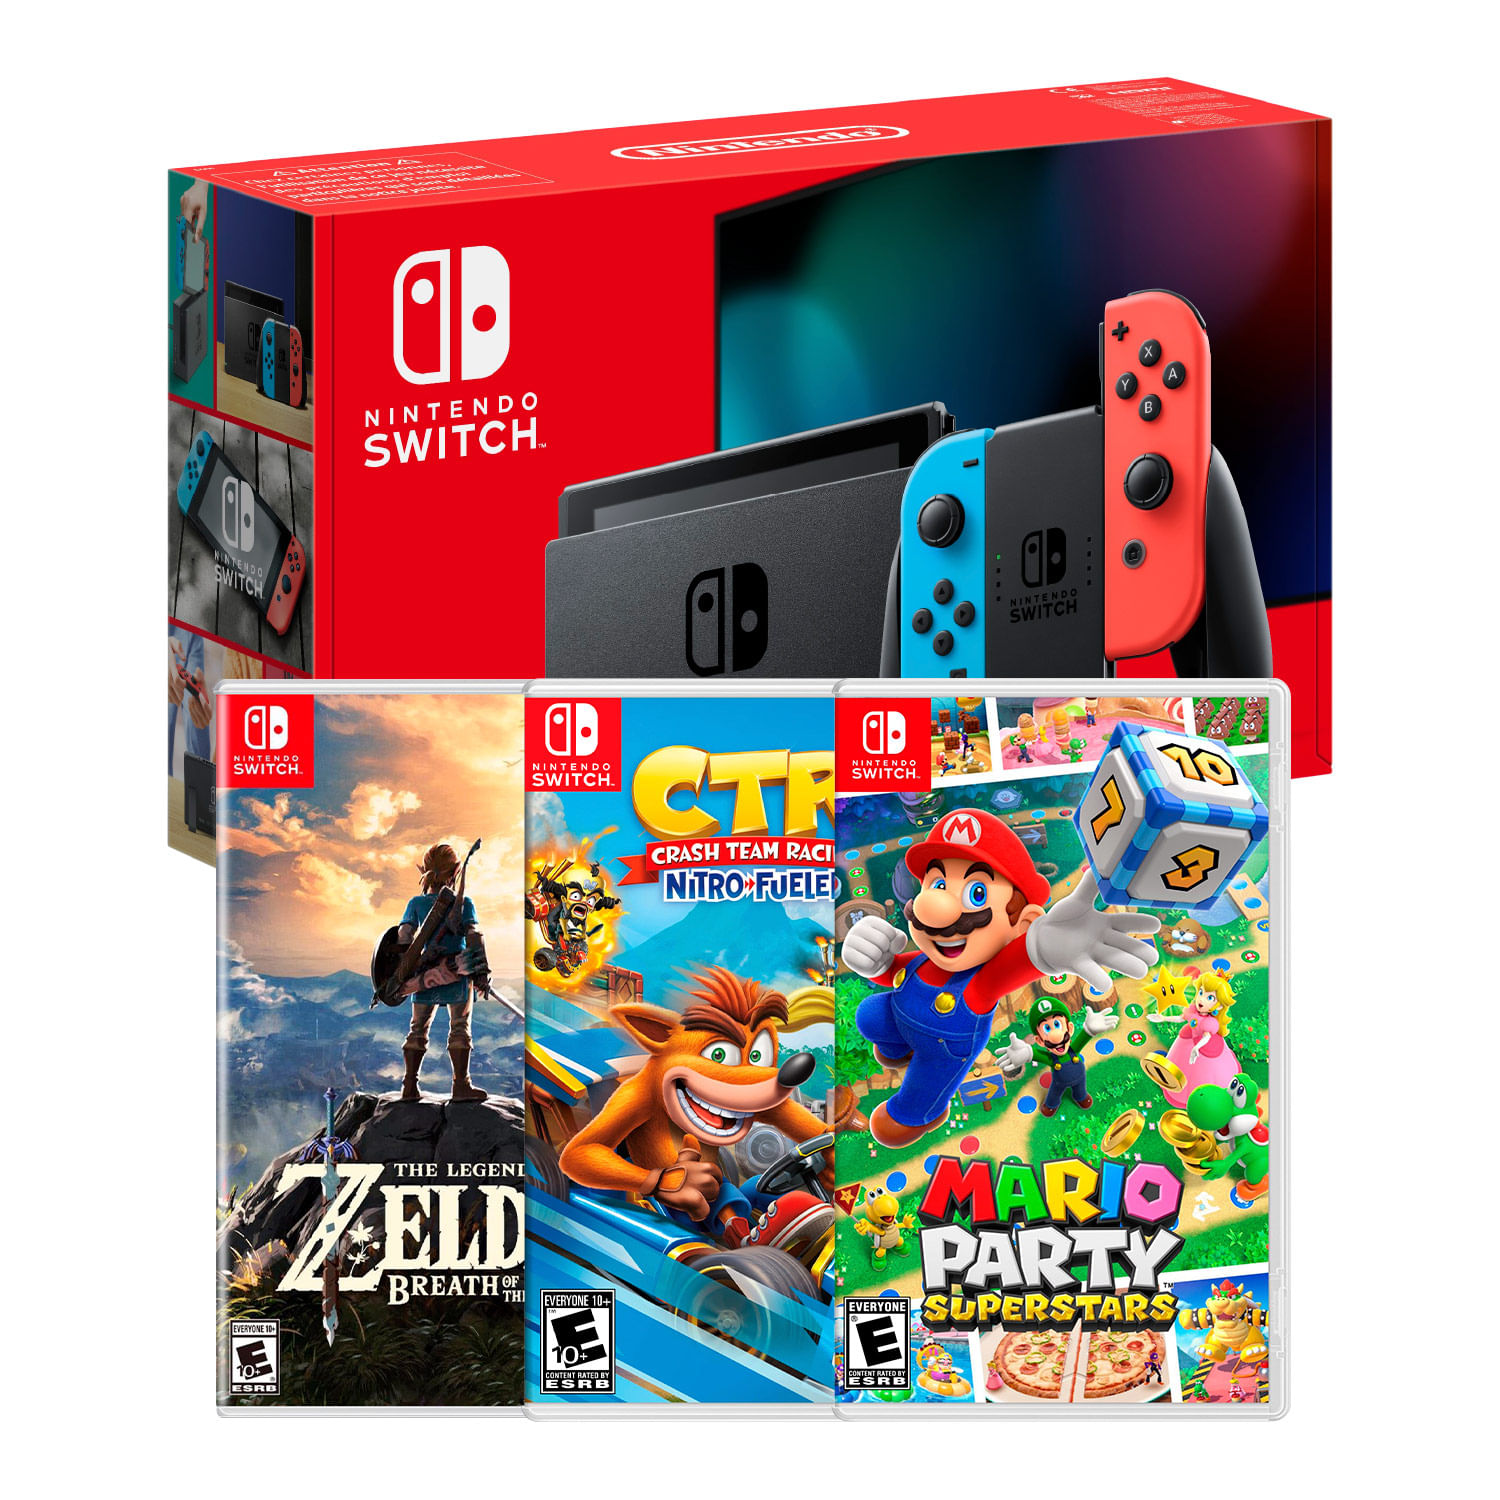 Consola Nintendo Switch Neon 2019 + Zelda Breath of the Wild + Crash team Racing + Mario Party Superstar